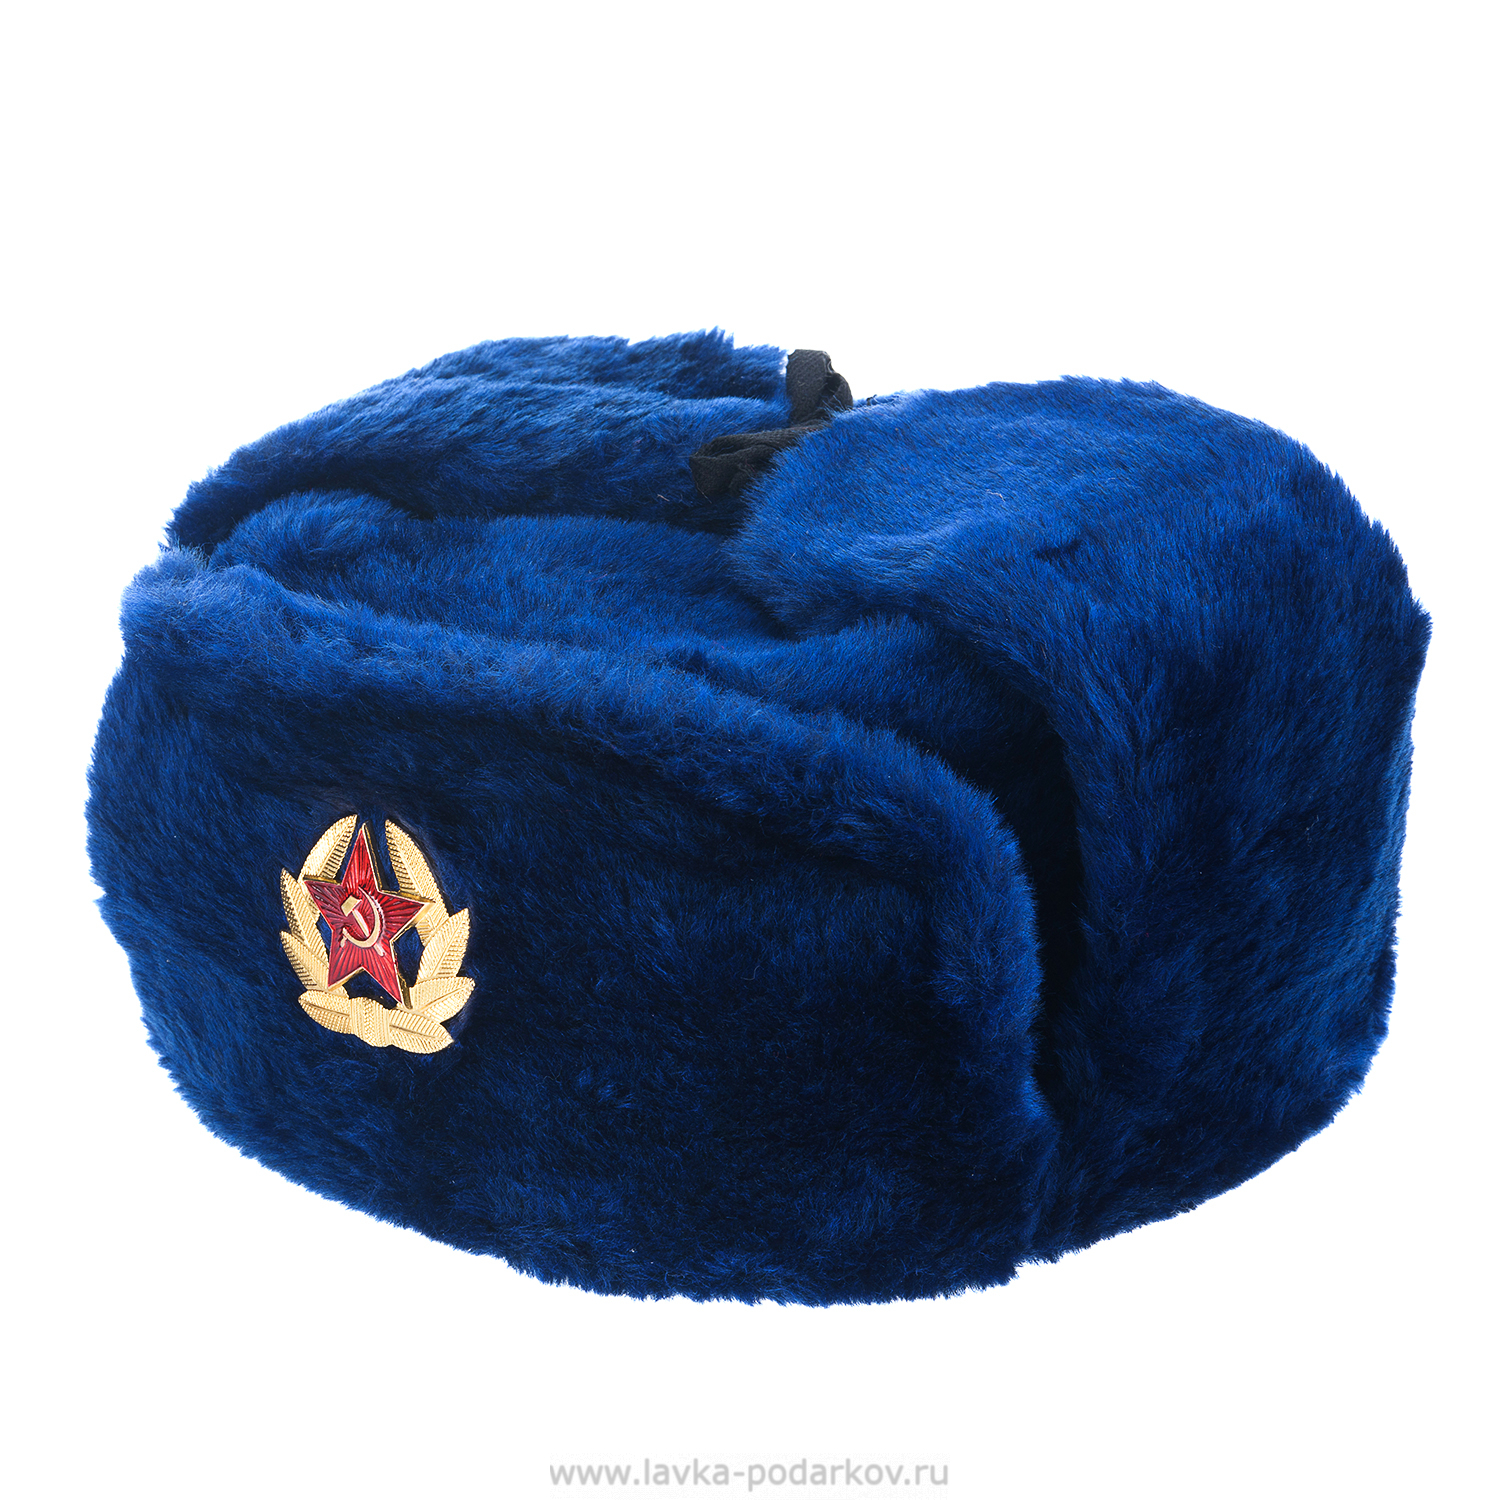 Сувенир русская шапка